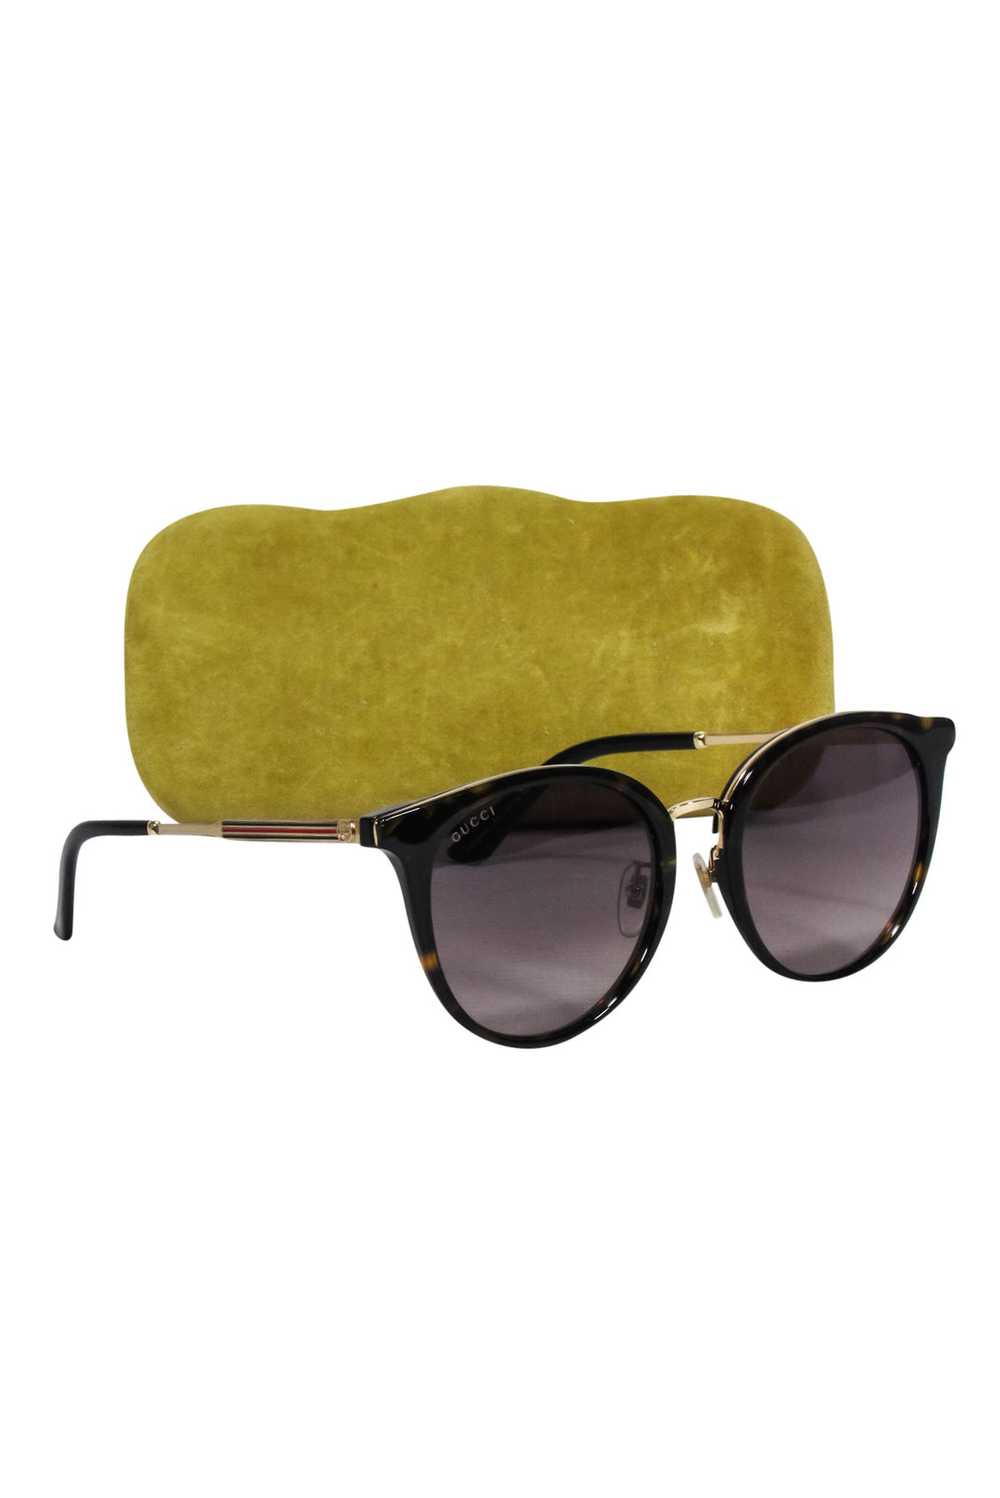 Gucci - Brown Tortoise Oversized Round Sunglasses - image 1